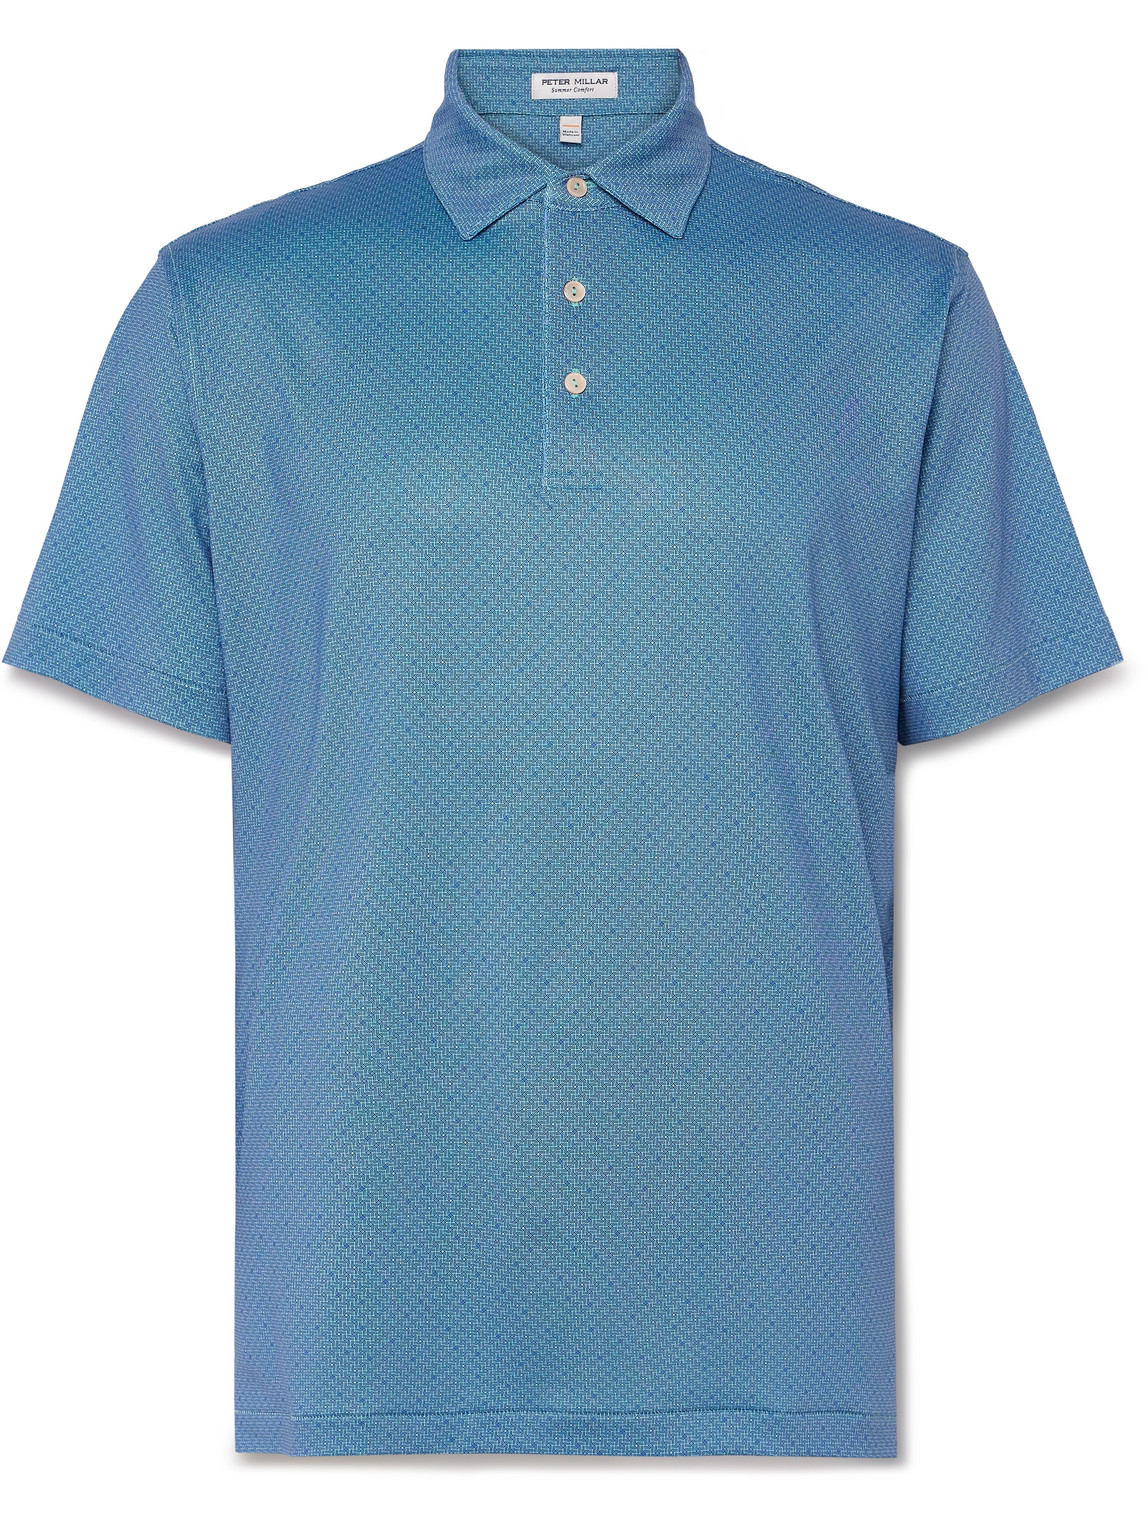 Peter Millar - Soriano Printed Stretch-Jersey Golf Polo Shirt - Men - Blue - S von Peter Millar